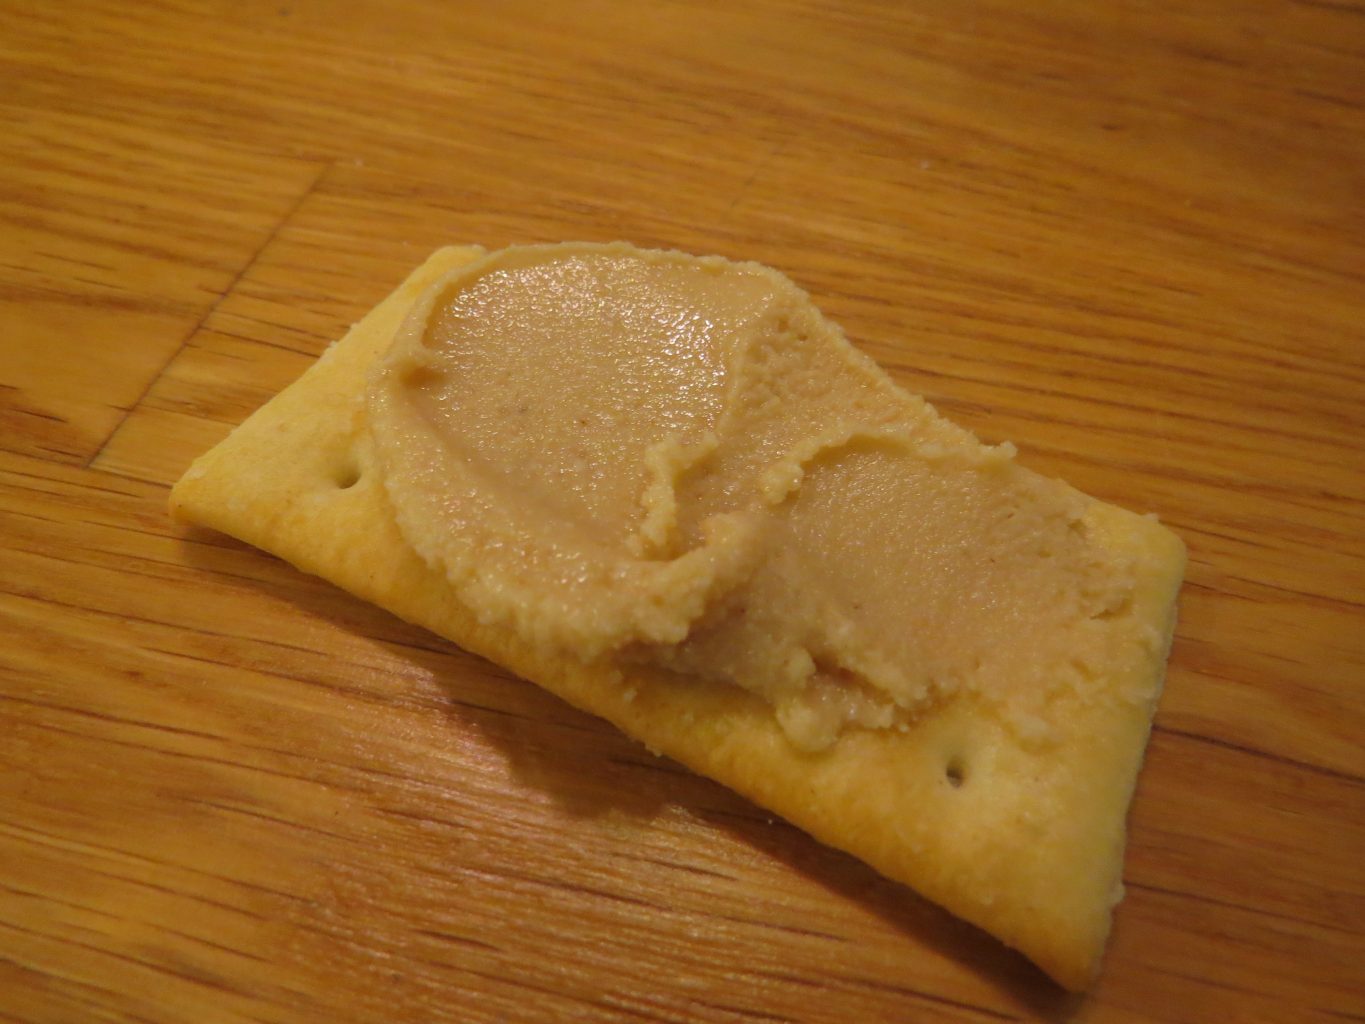 homemade peanut butter on cracker